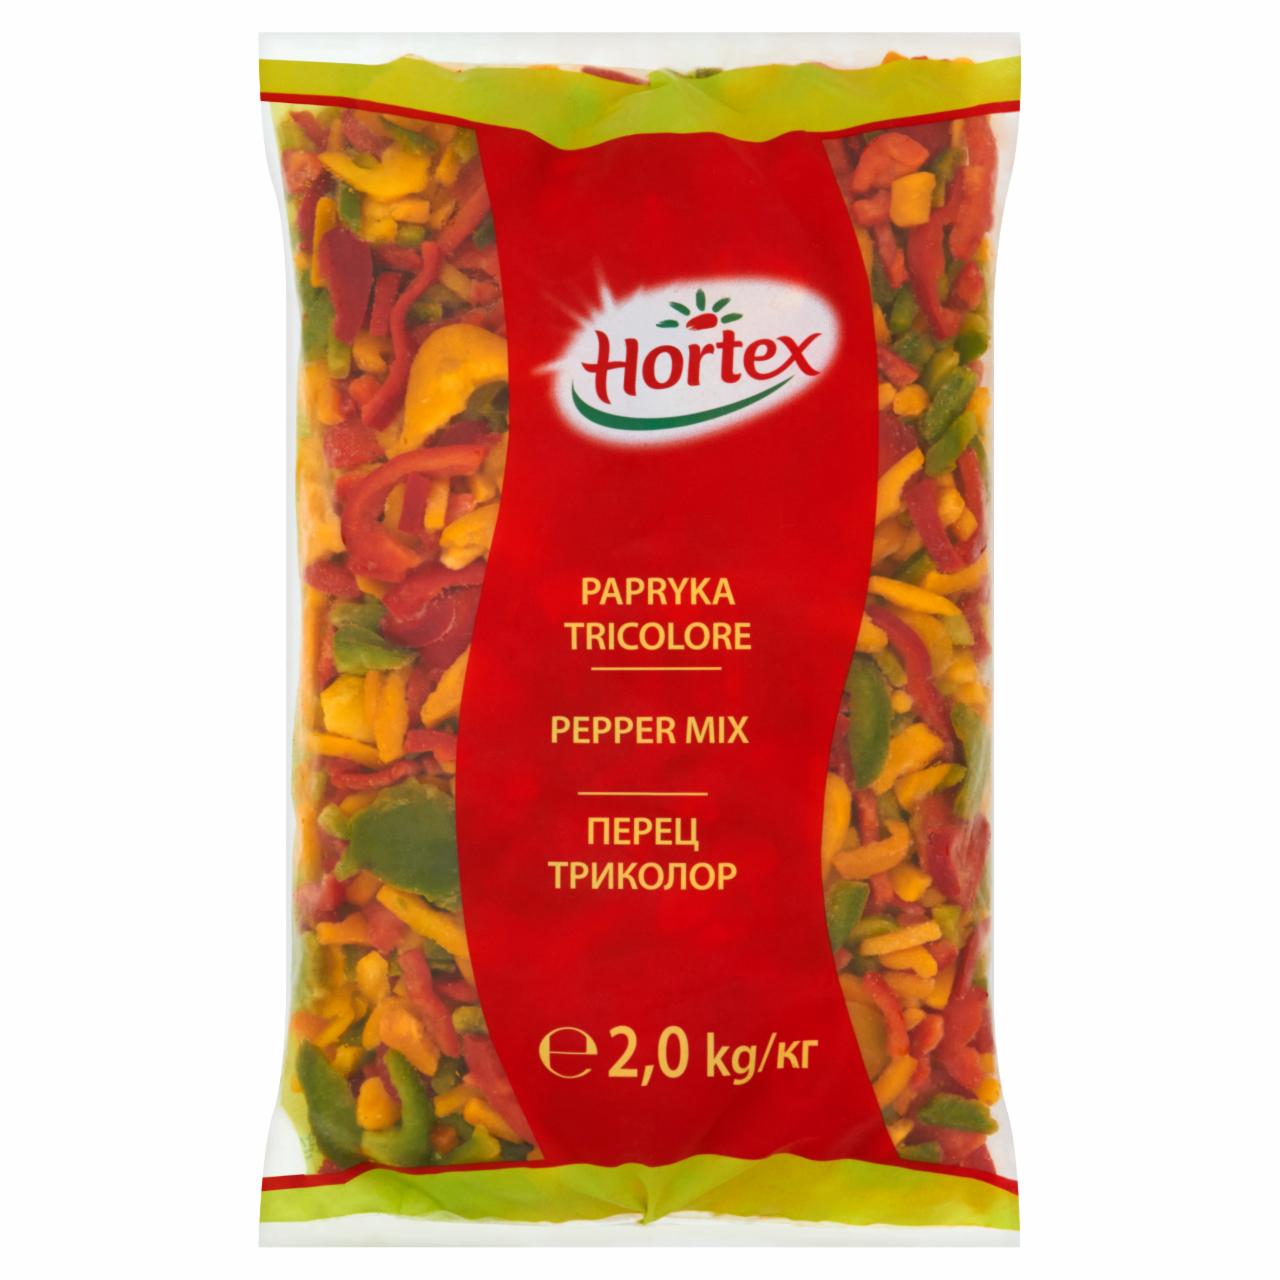 Zdjęcia - Hortex Papryka tricolore 2,0 kg